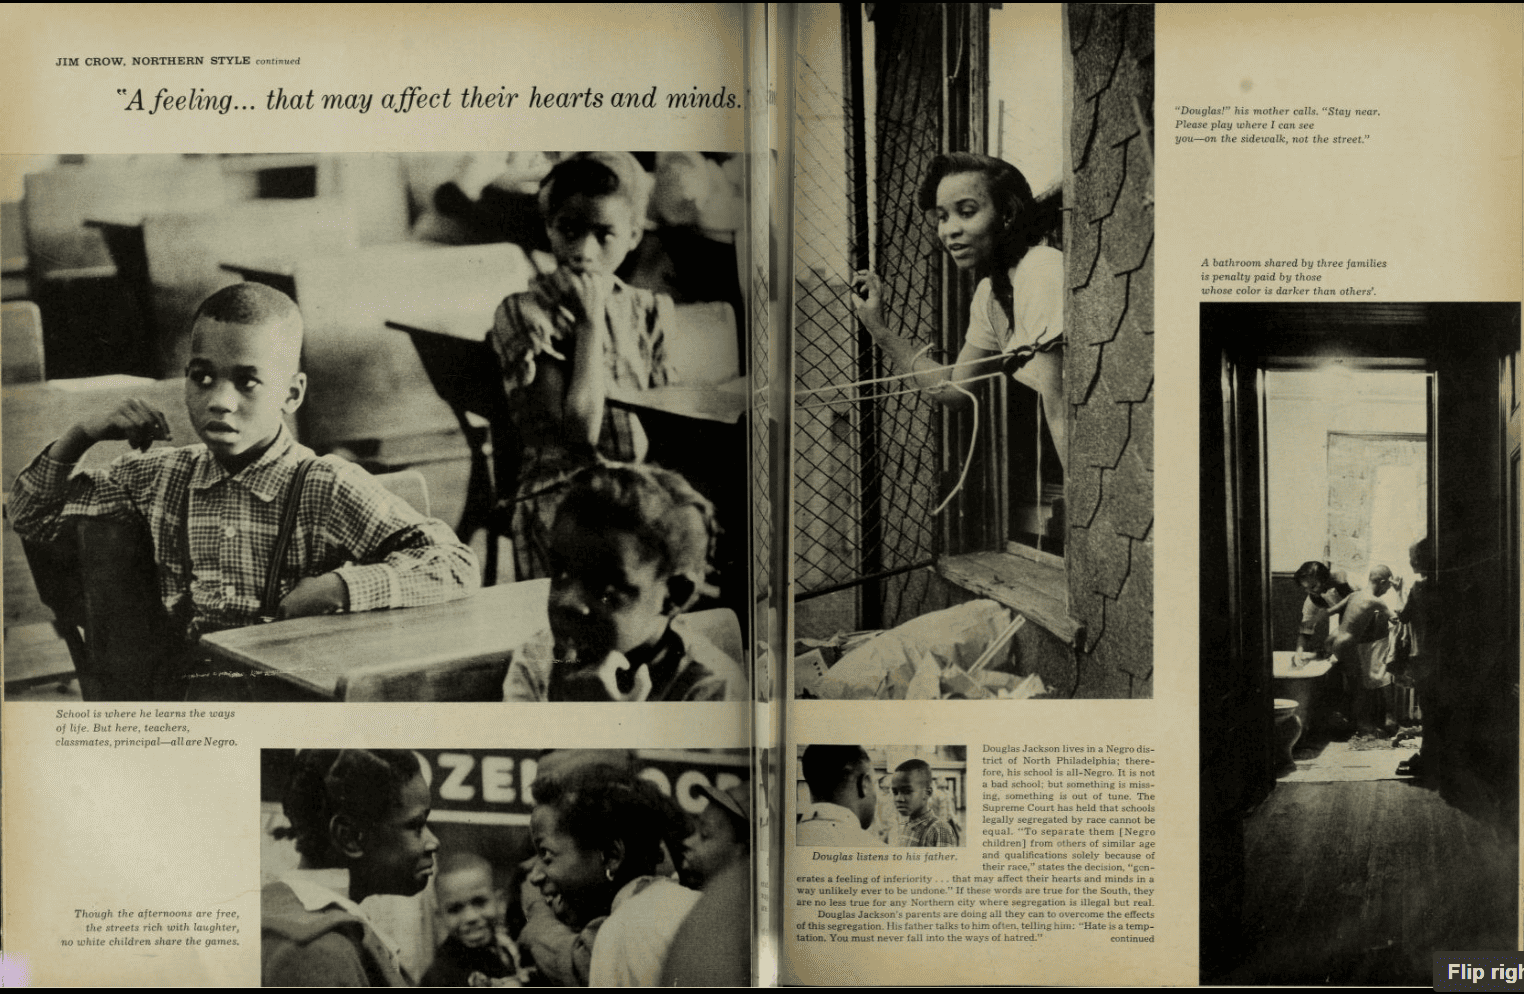 Jim Crow, Northern Style, by Doug Jones & John Vachon, 1956